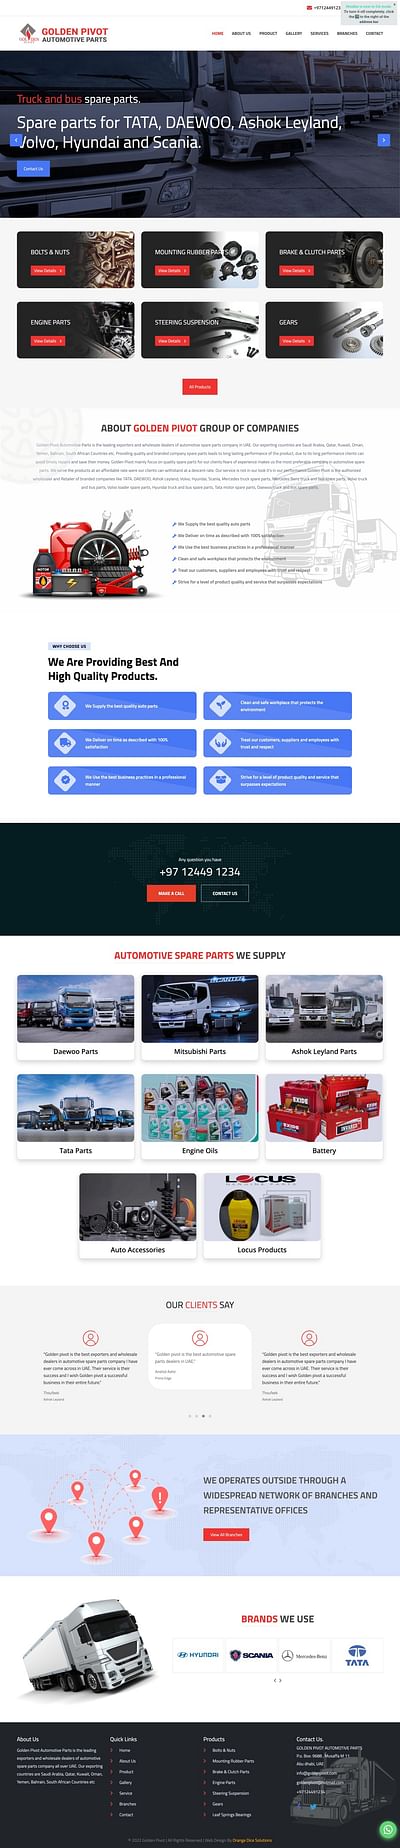 Website designed for Goldenpivot automobile - Application web